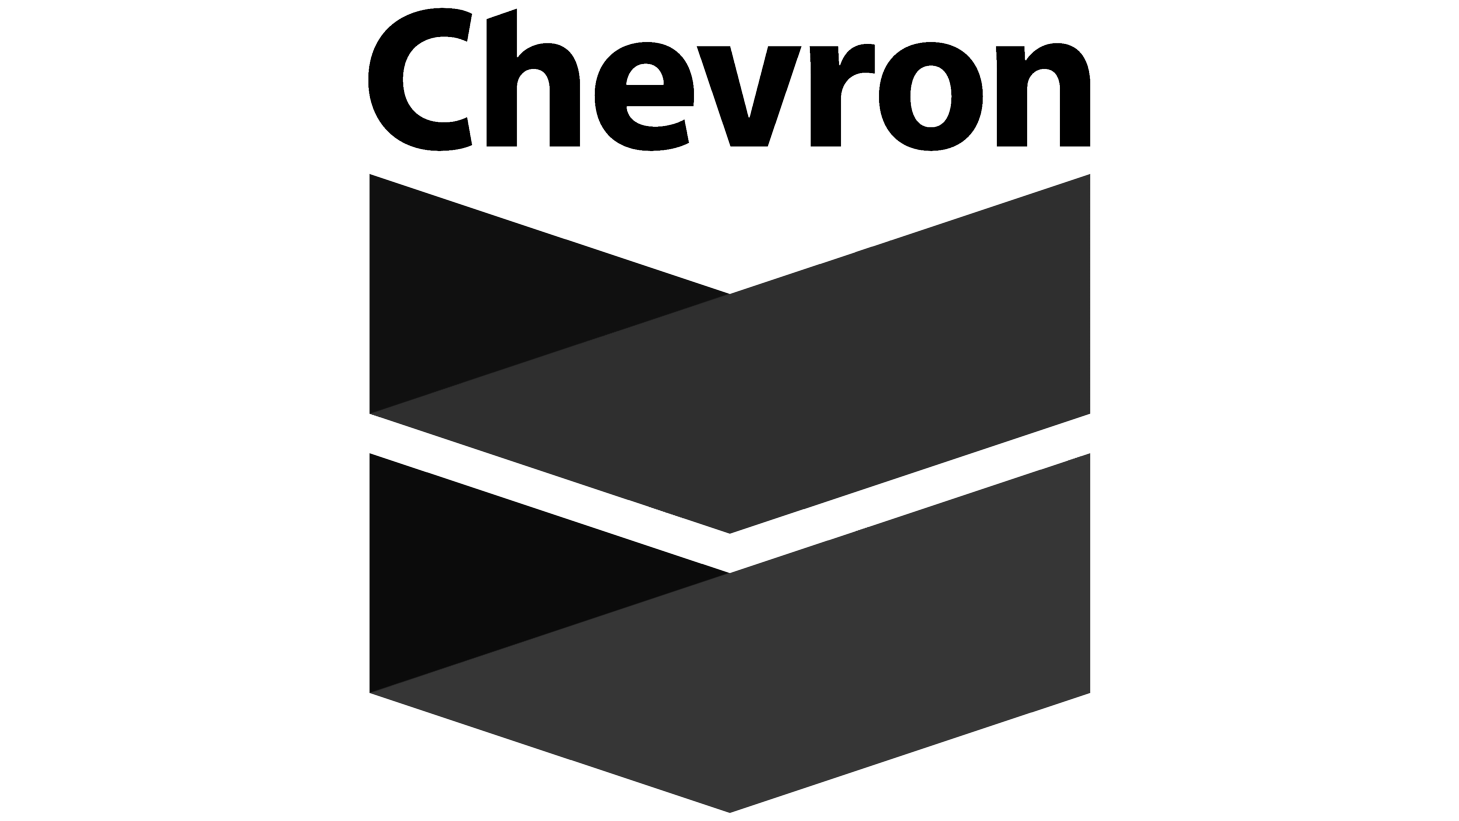 Chevron symbol